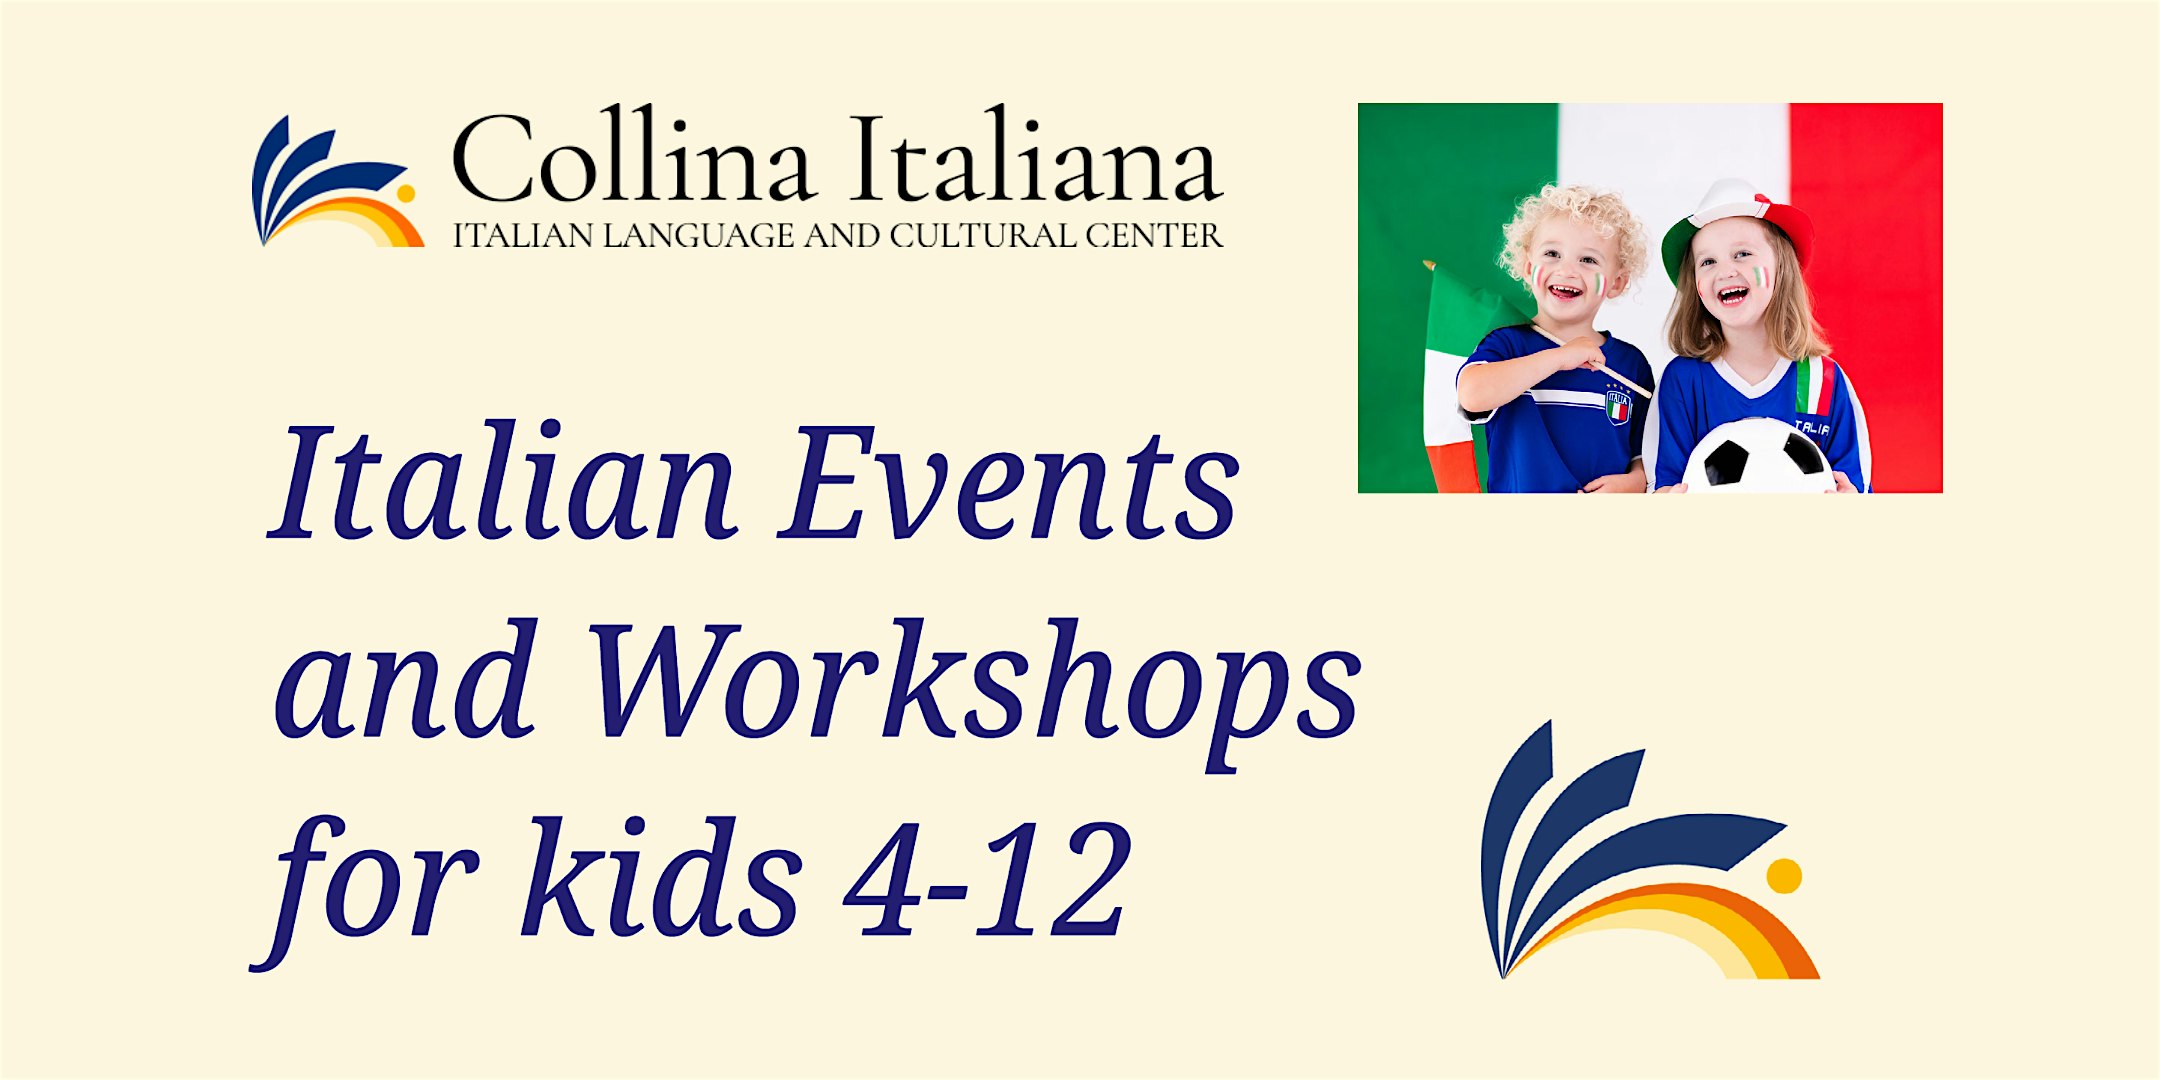 Italian Events for Kids (4-12) - HALLOWEEN